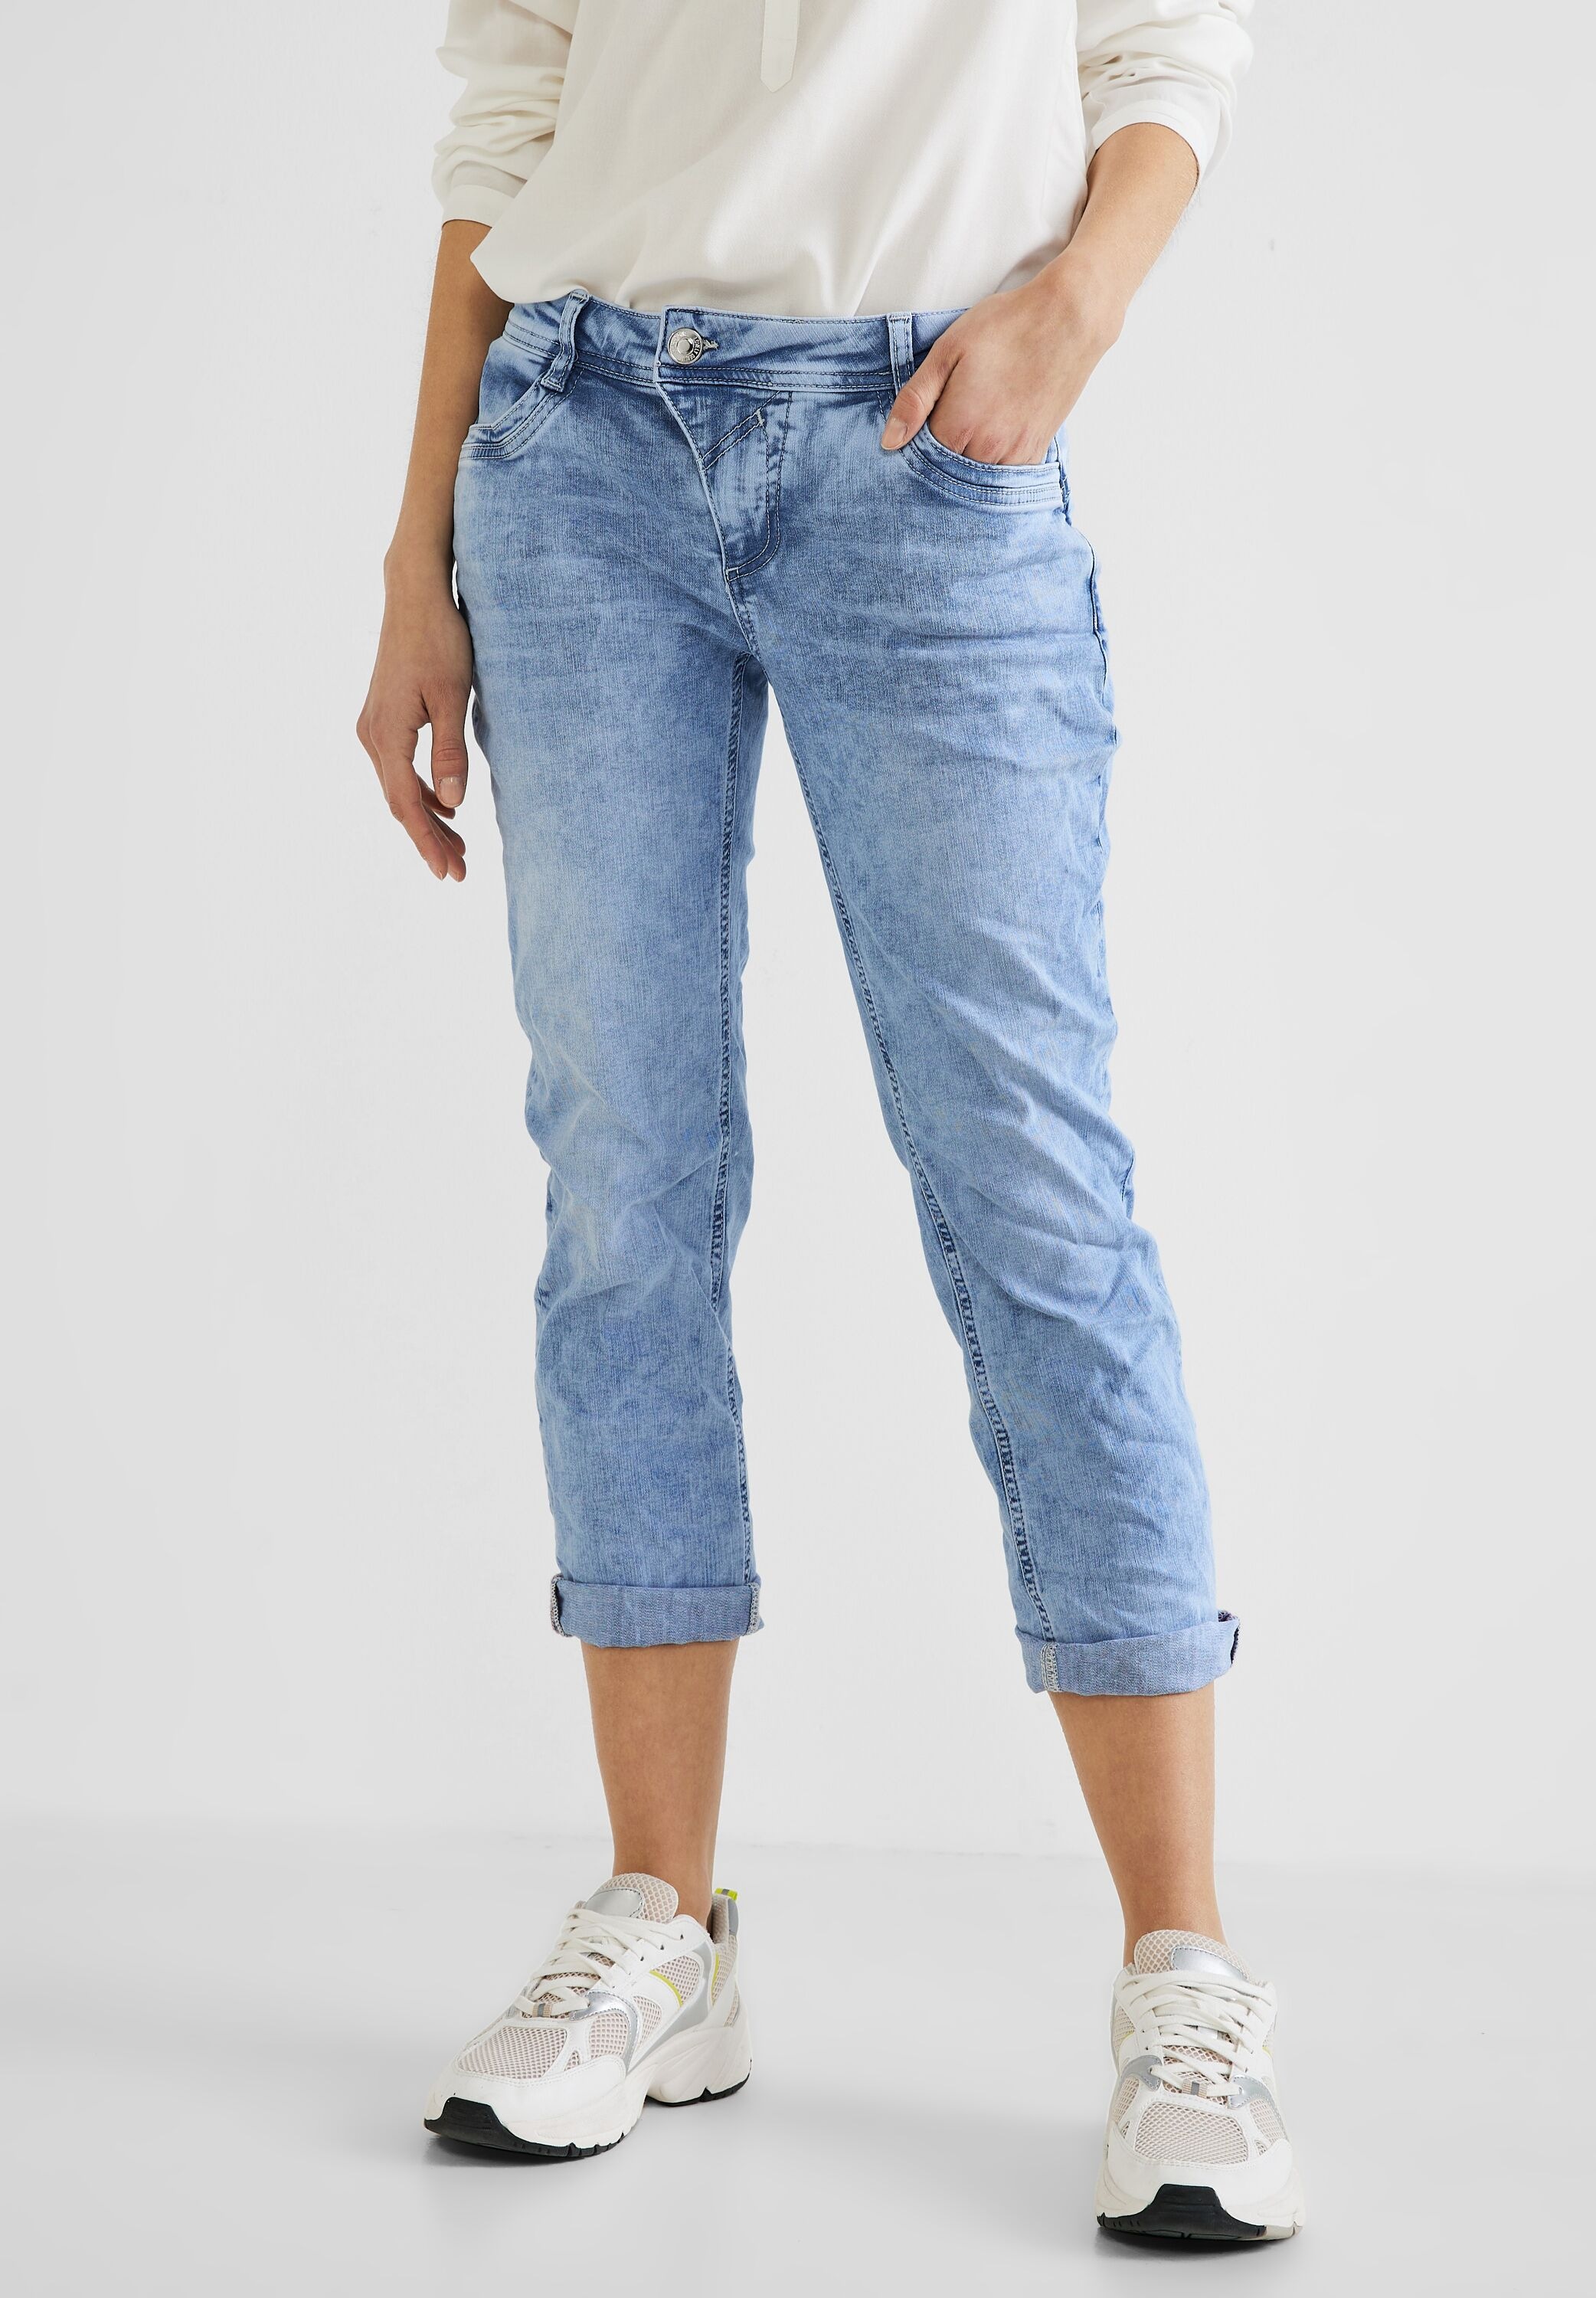 | kaufen STREET Style online BAUR ONE Comfort-fit-Jeans, 4-Pocket